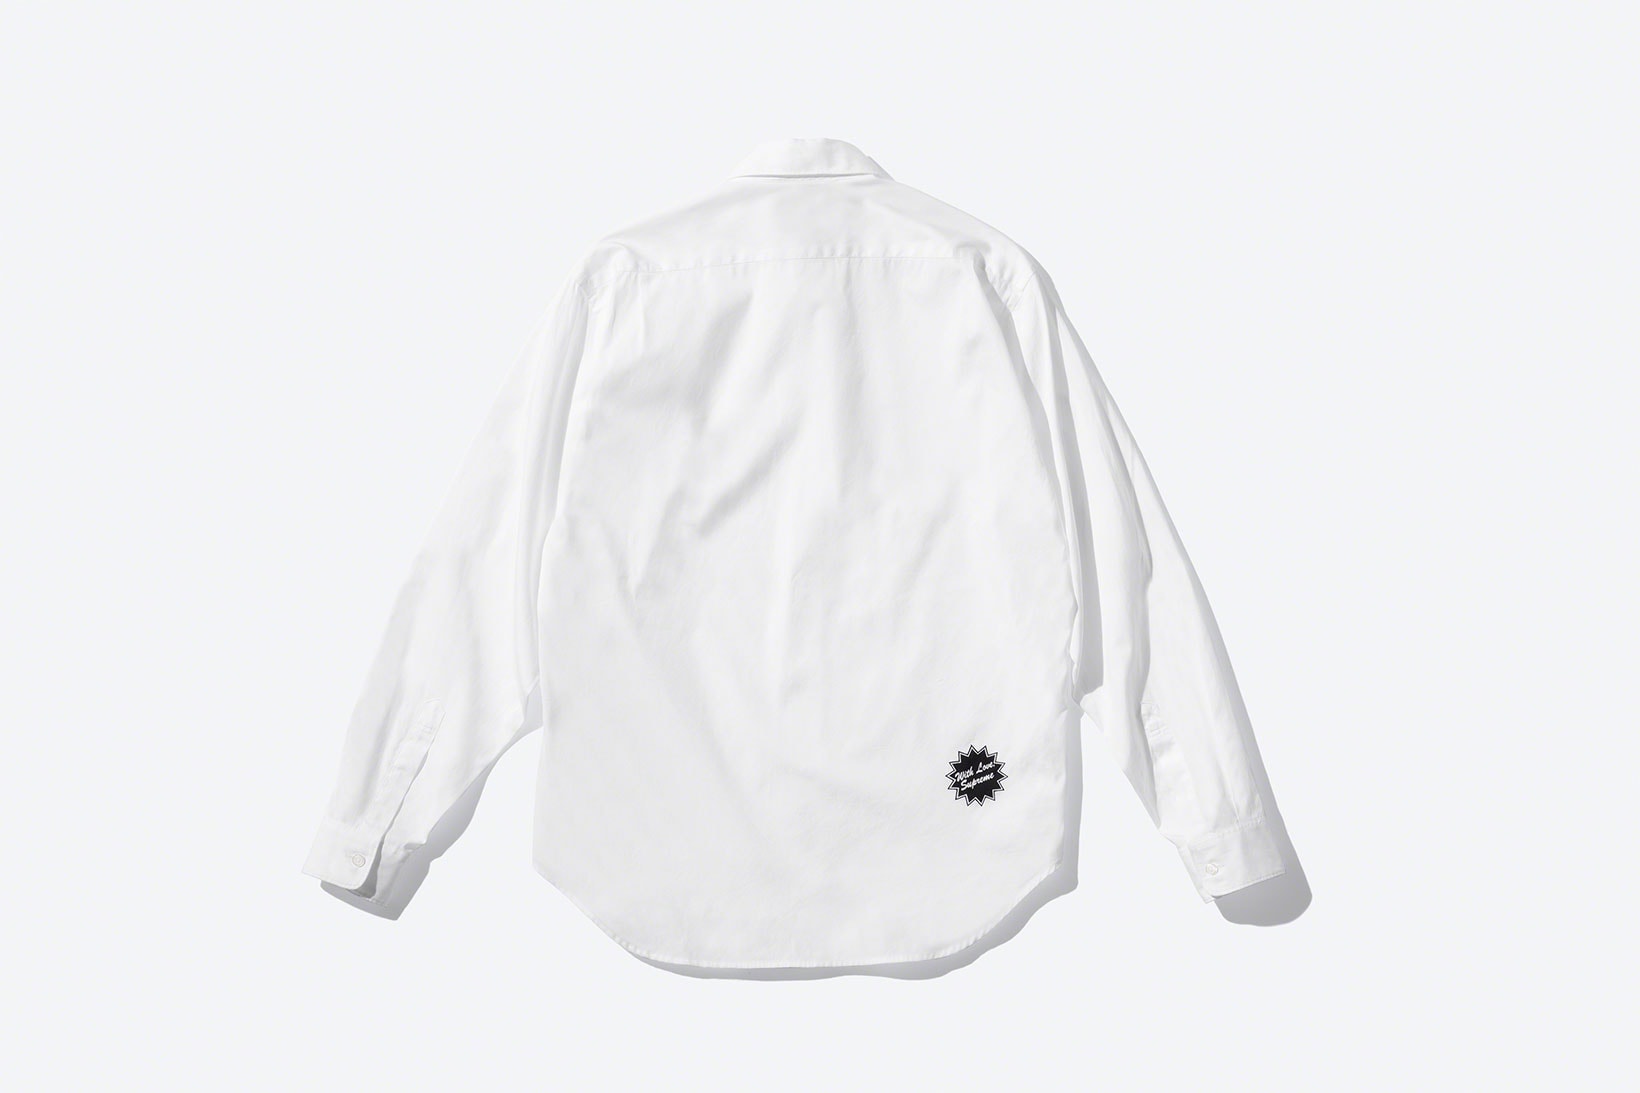 supreme jamie reid spring 2021 collection white shirt back